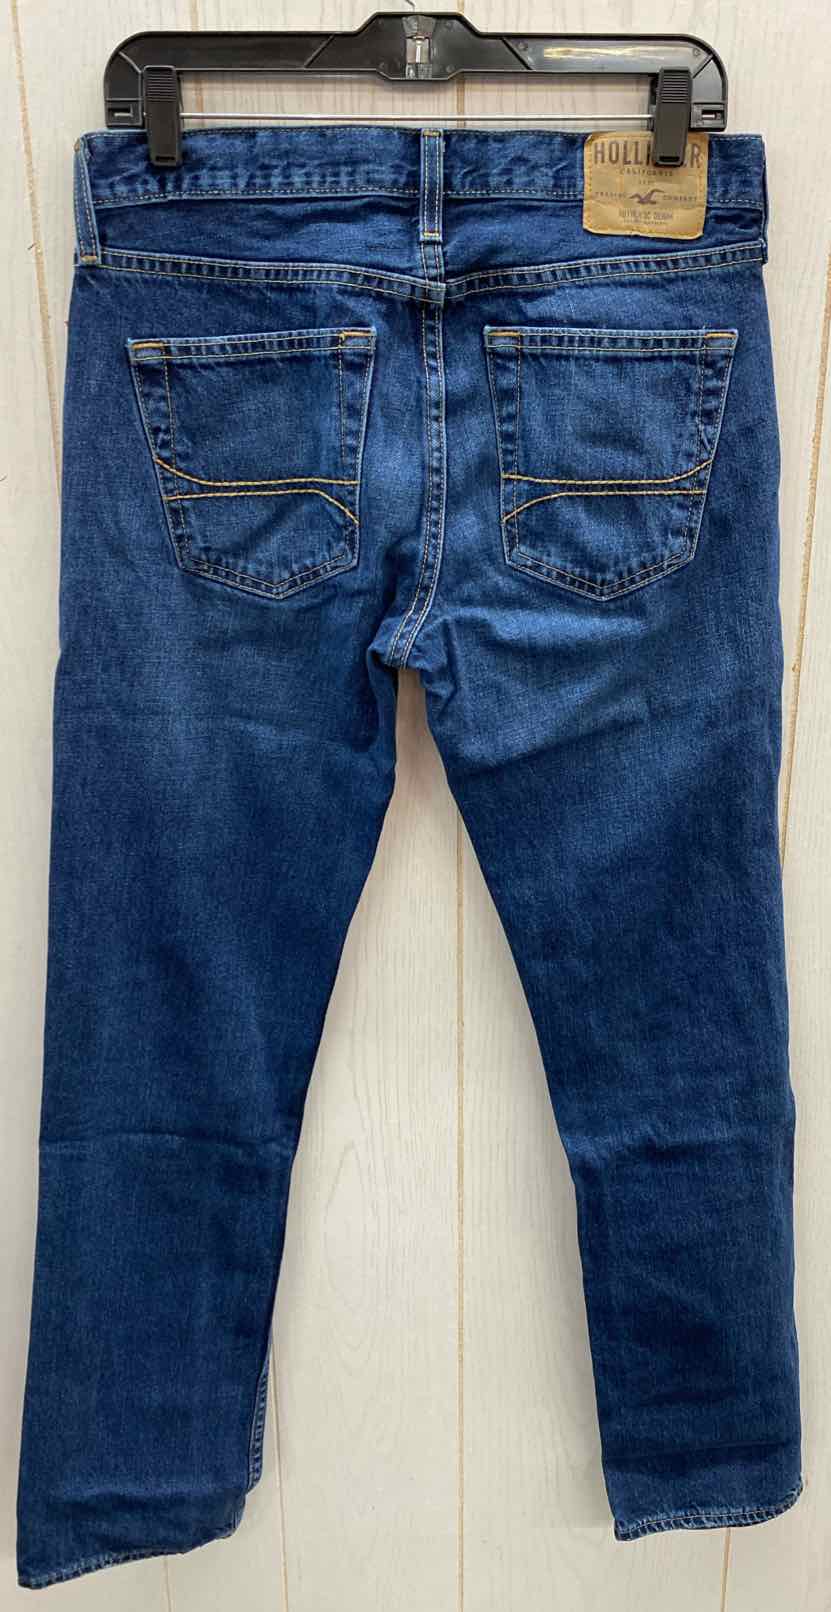 Hollister Size 30/32 Mens Jeans